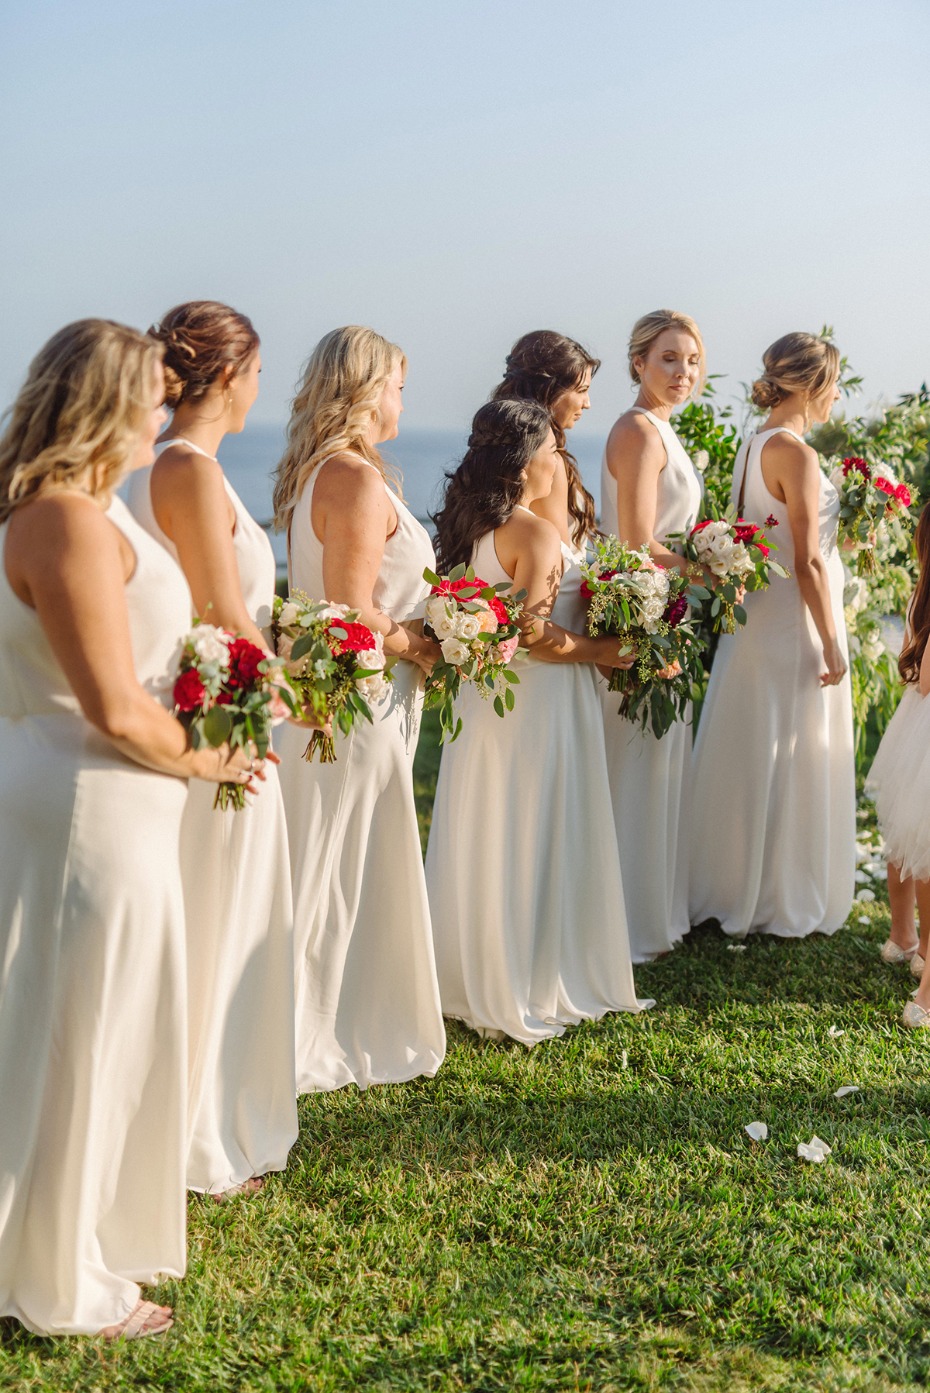 bridesmaids in matching white